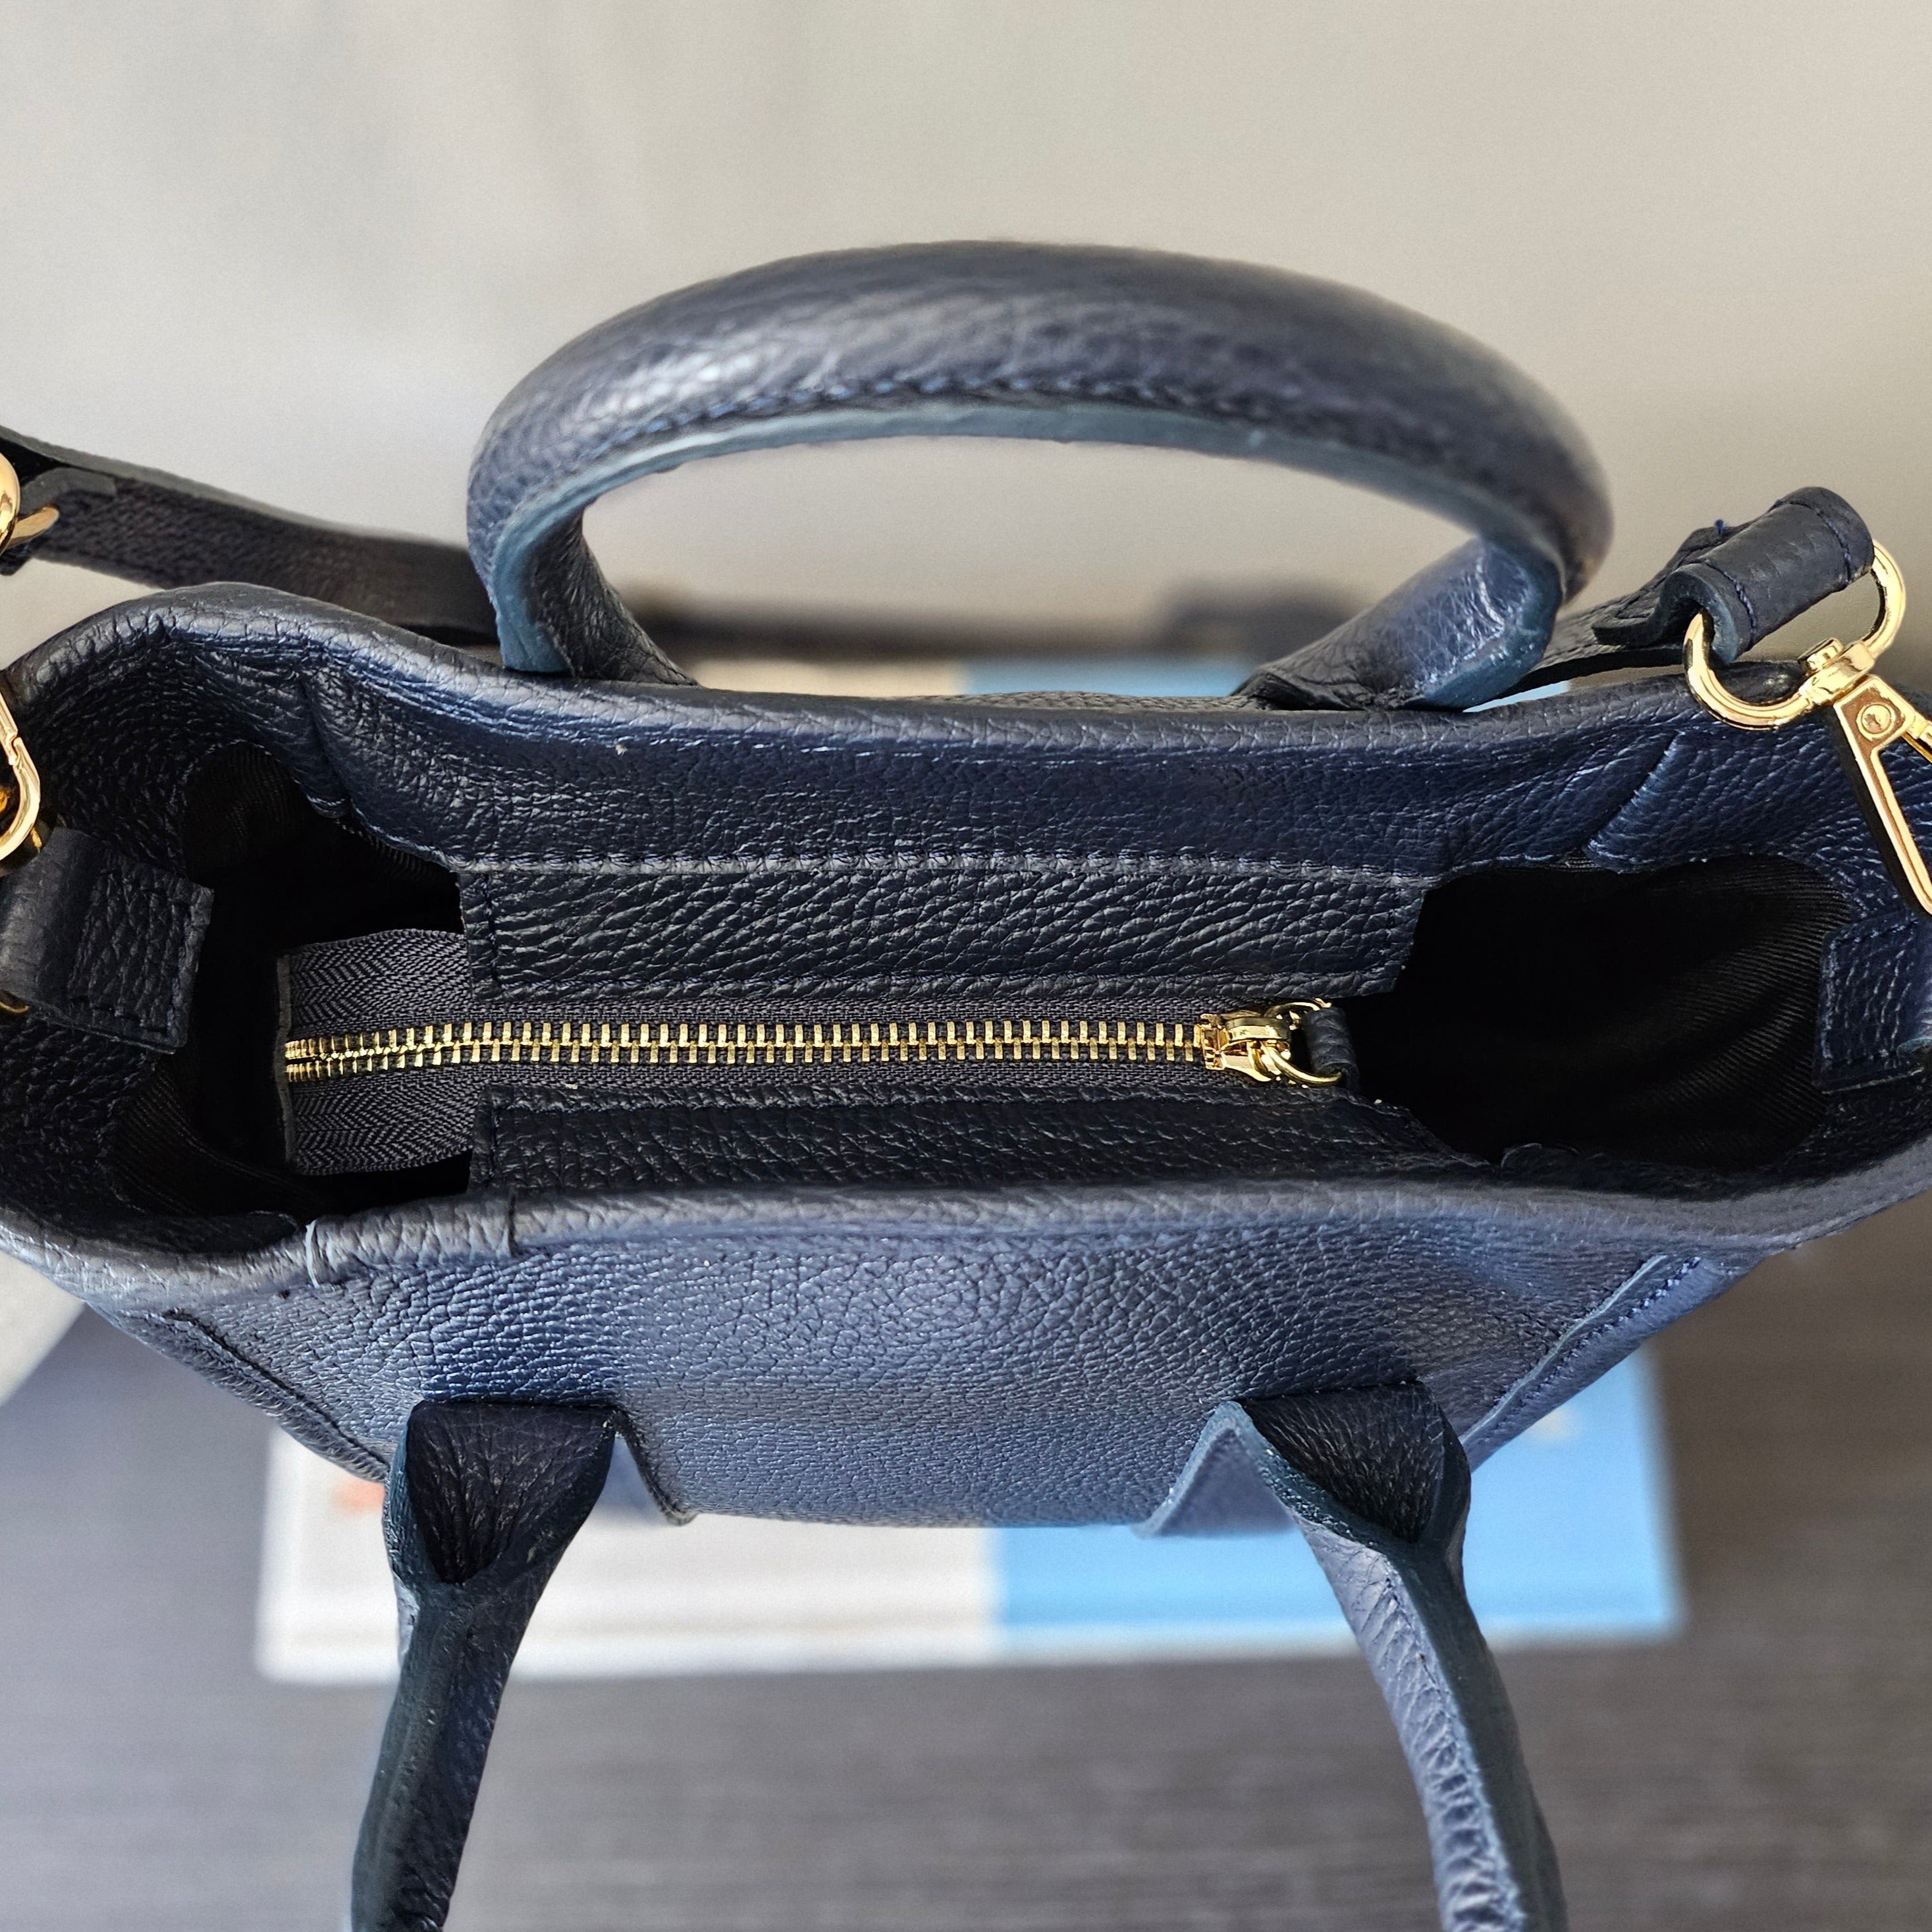 Iminglobal Italian leather Everyday tote crossbody bag